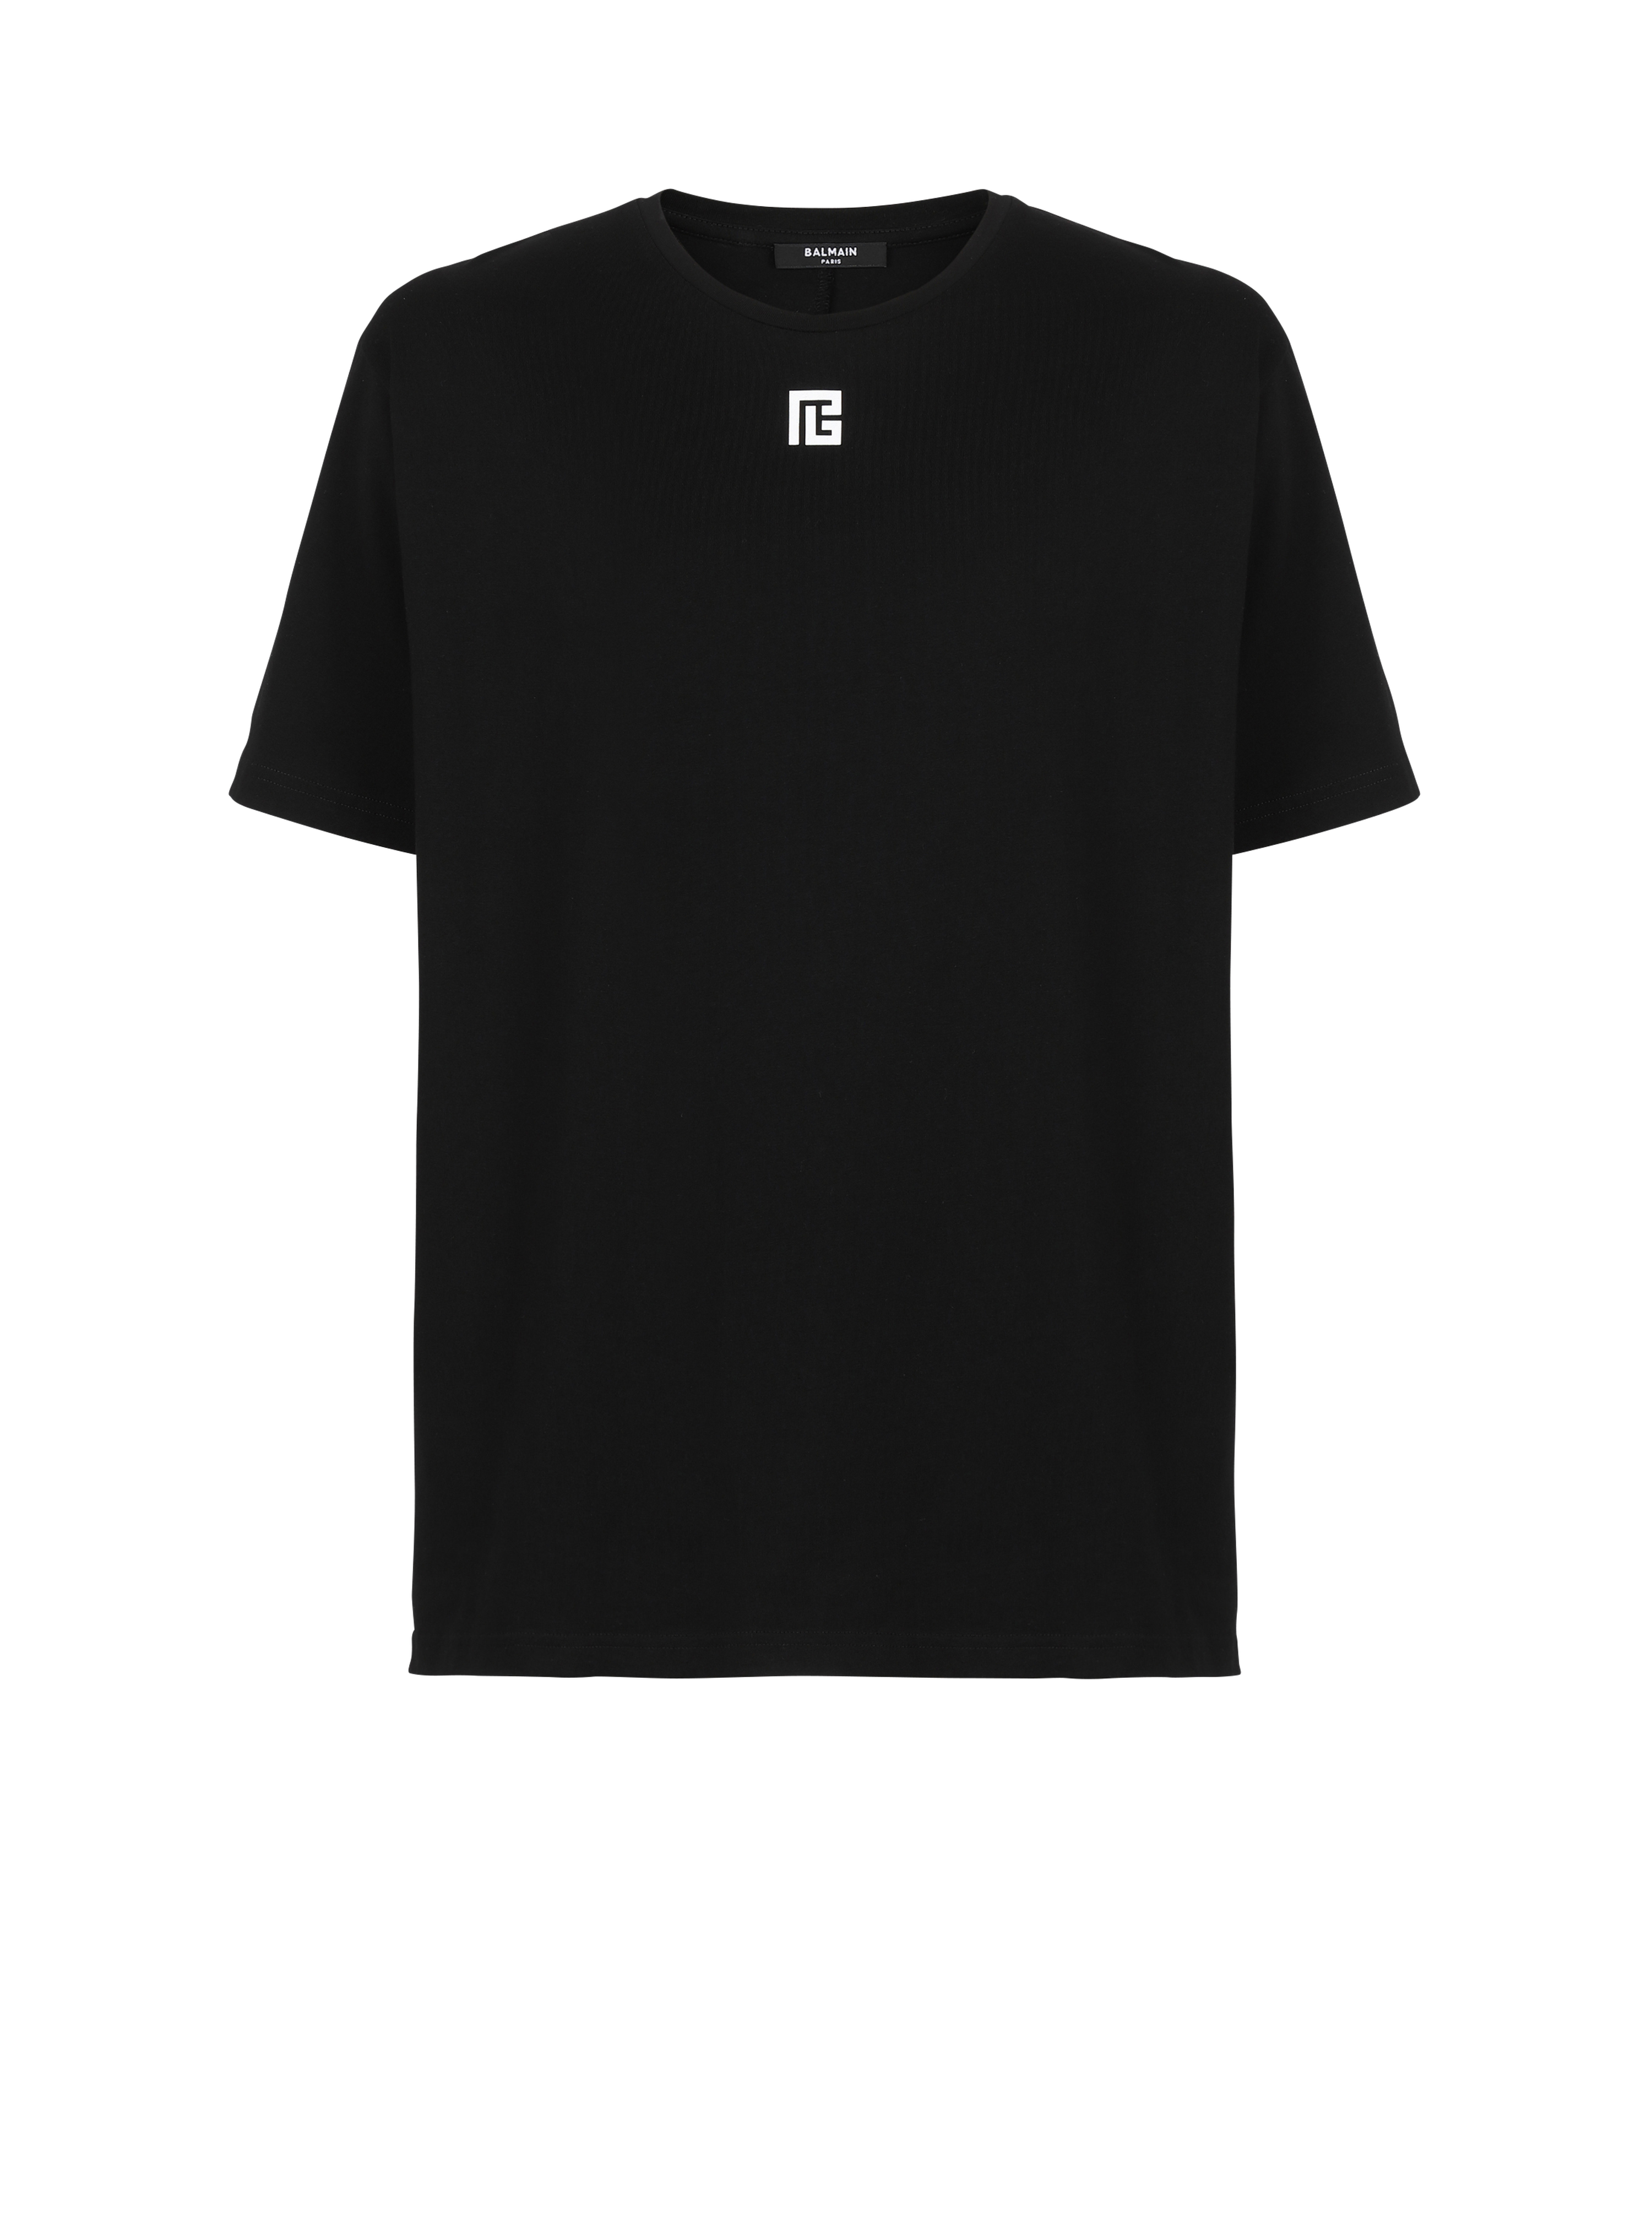 Oversized cotton T-shirt with maxi Balmain logo print, black